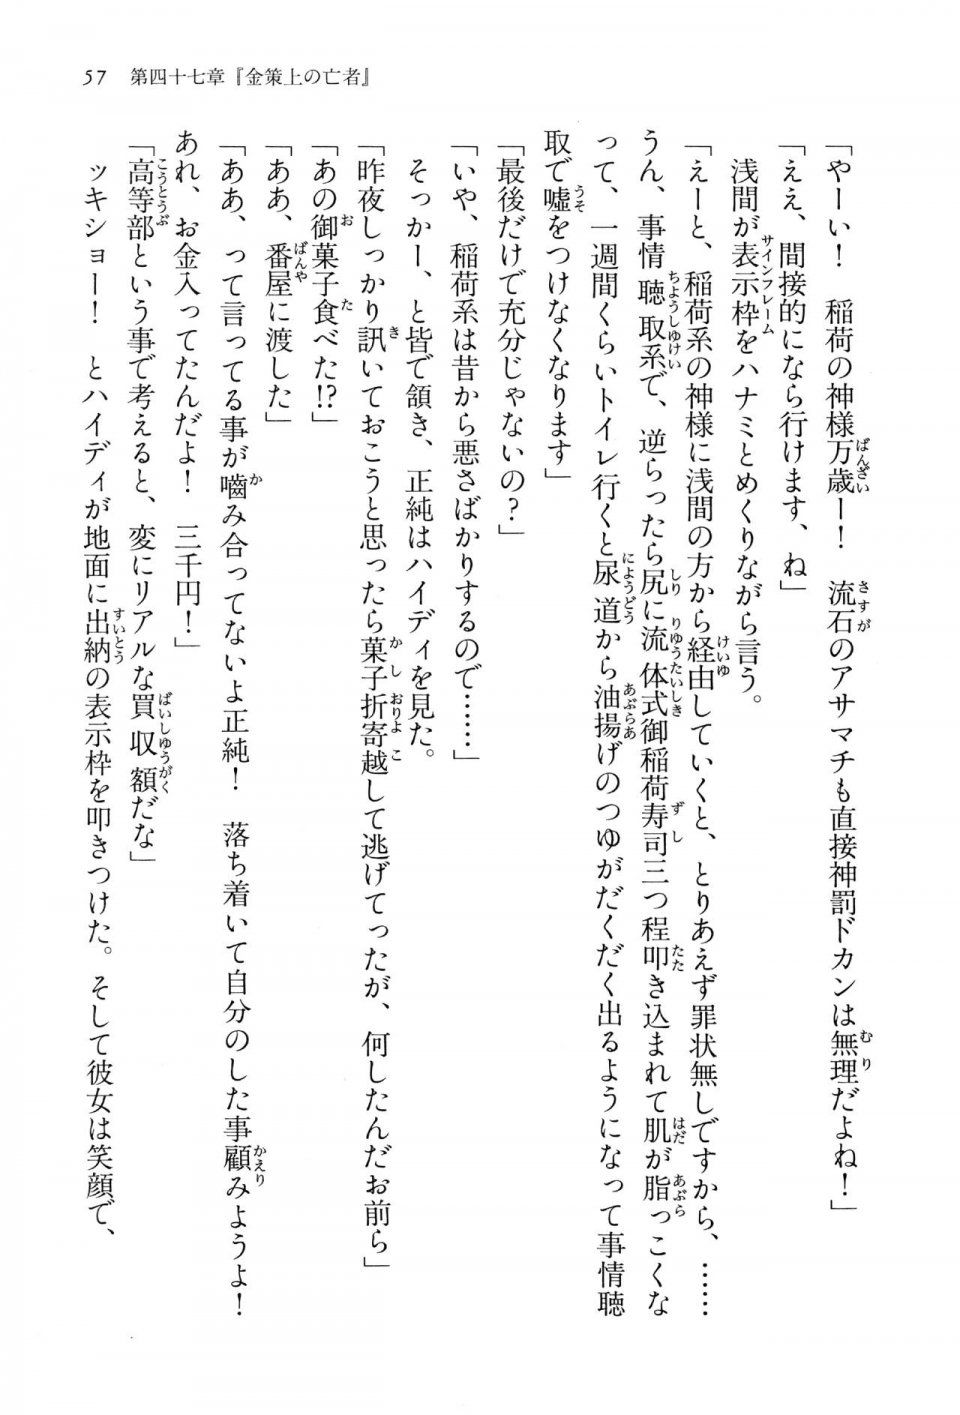 Kyoukai Senjou no Horizon LN Vol 15(6C) Part 1 - Photo #57